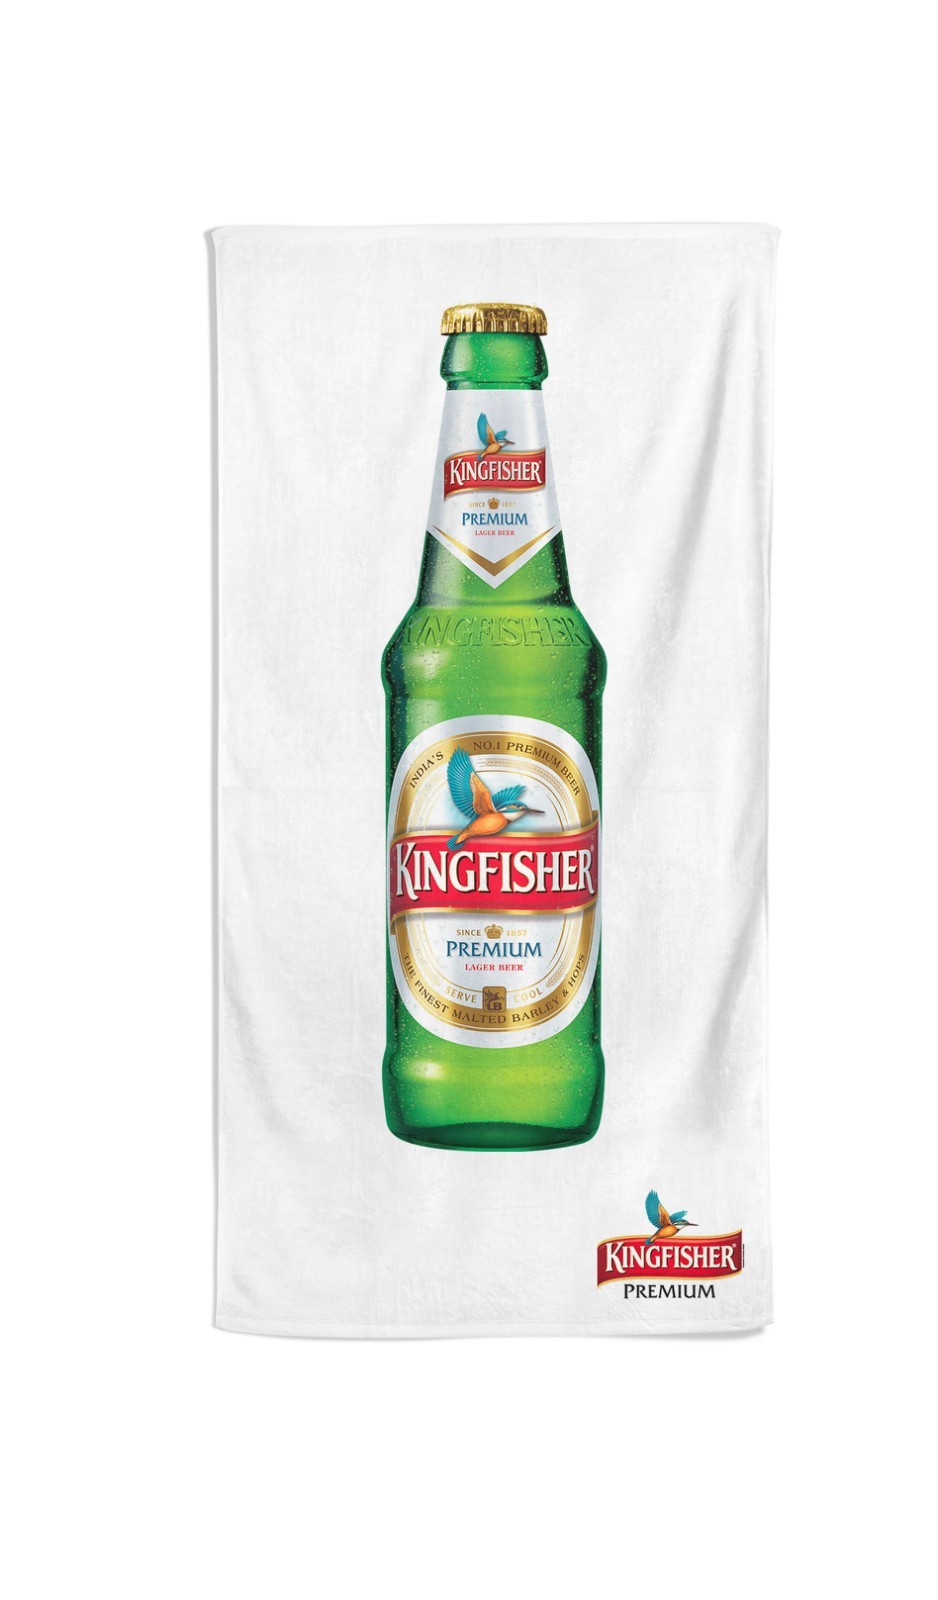 Kingfisher Bottle Beer Beach Bath Towel Swimming Pool Vacation Memento Gift